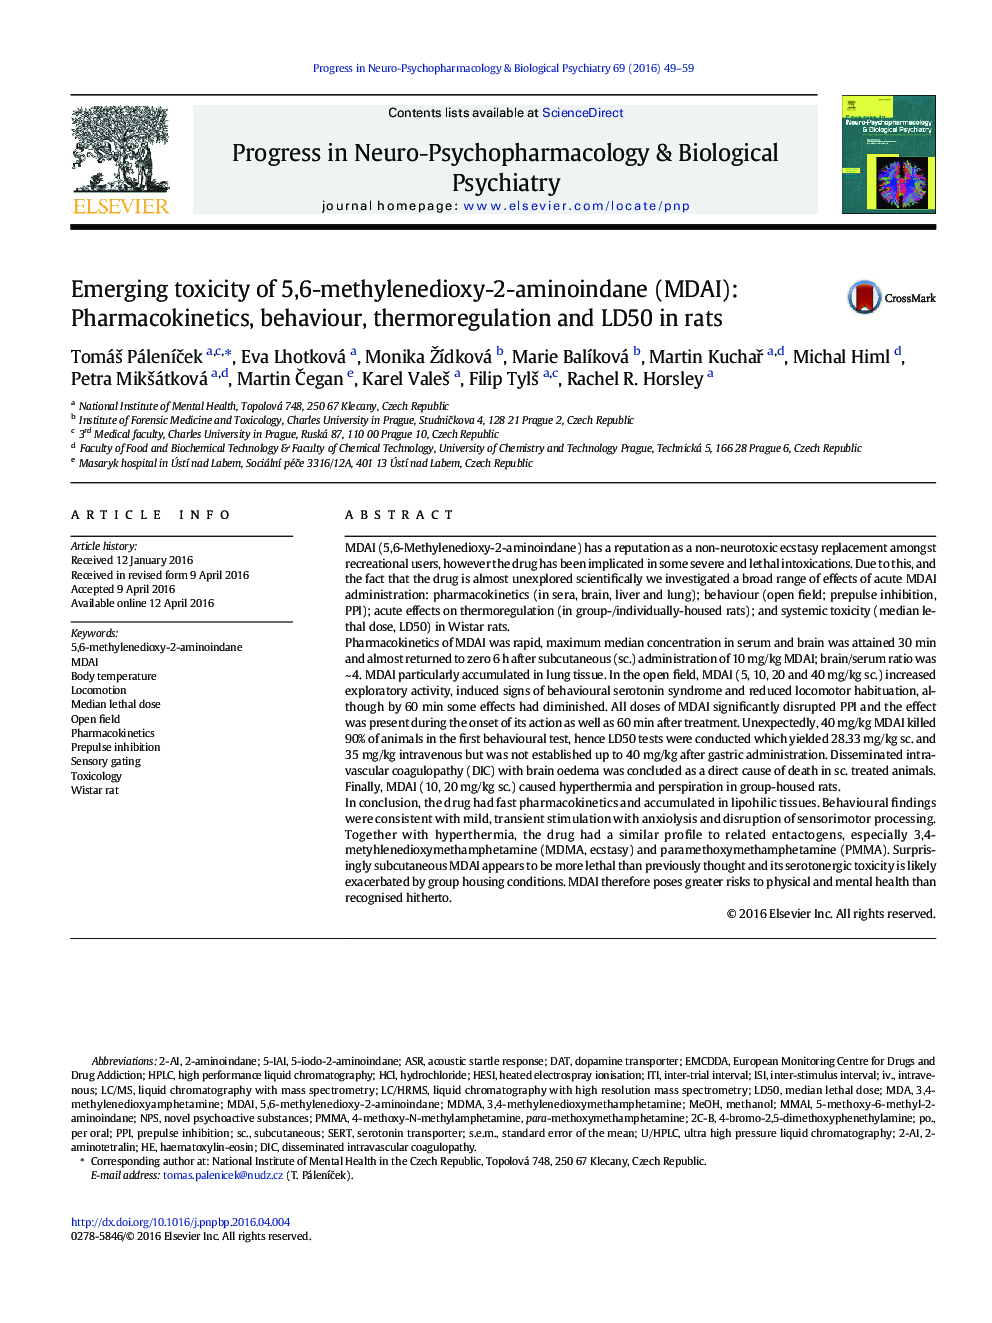 Emerging toxicity of 5,6-methylenedioxy-2-aminoindane (MDAI): Pharmacokinetics, behaviour, thermoregulation and LD50 in rats